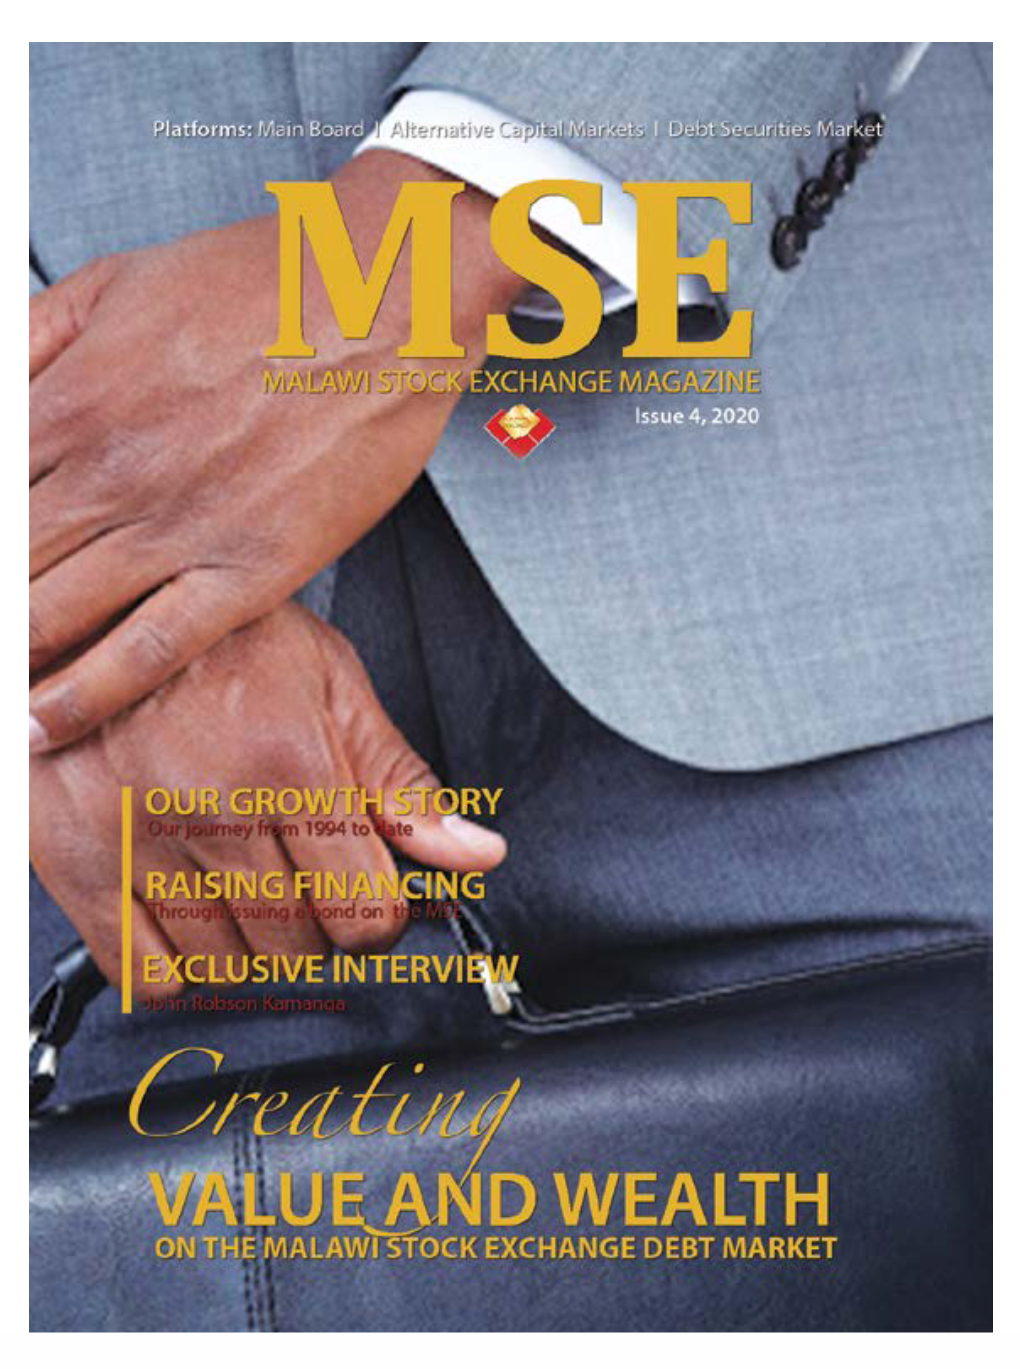 MSE Magazine 1 Issue 4, 2020